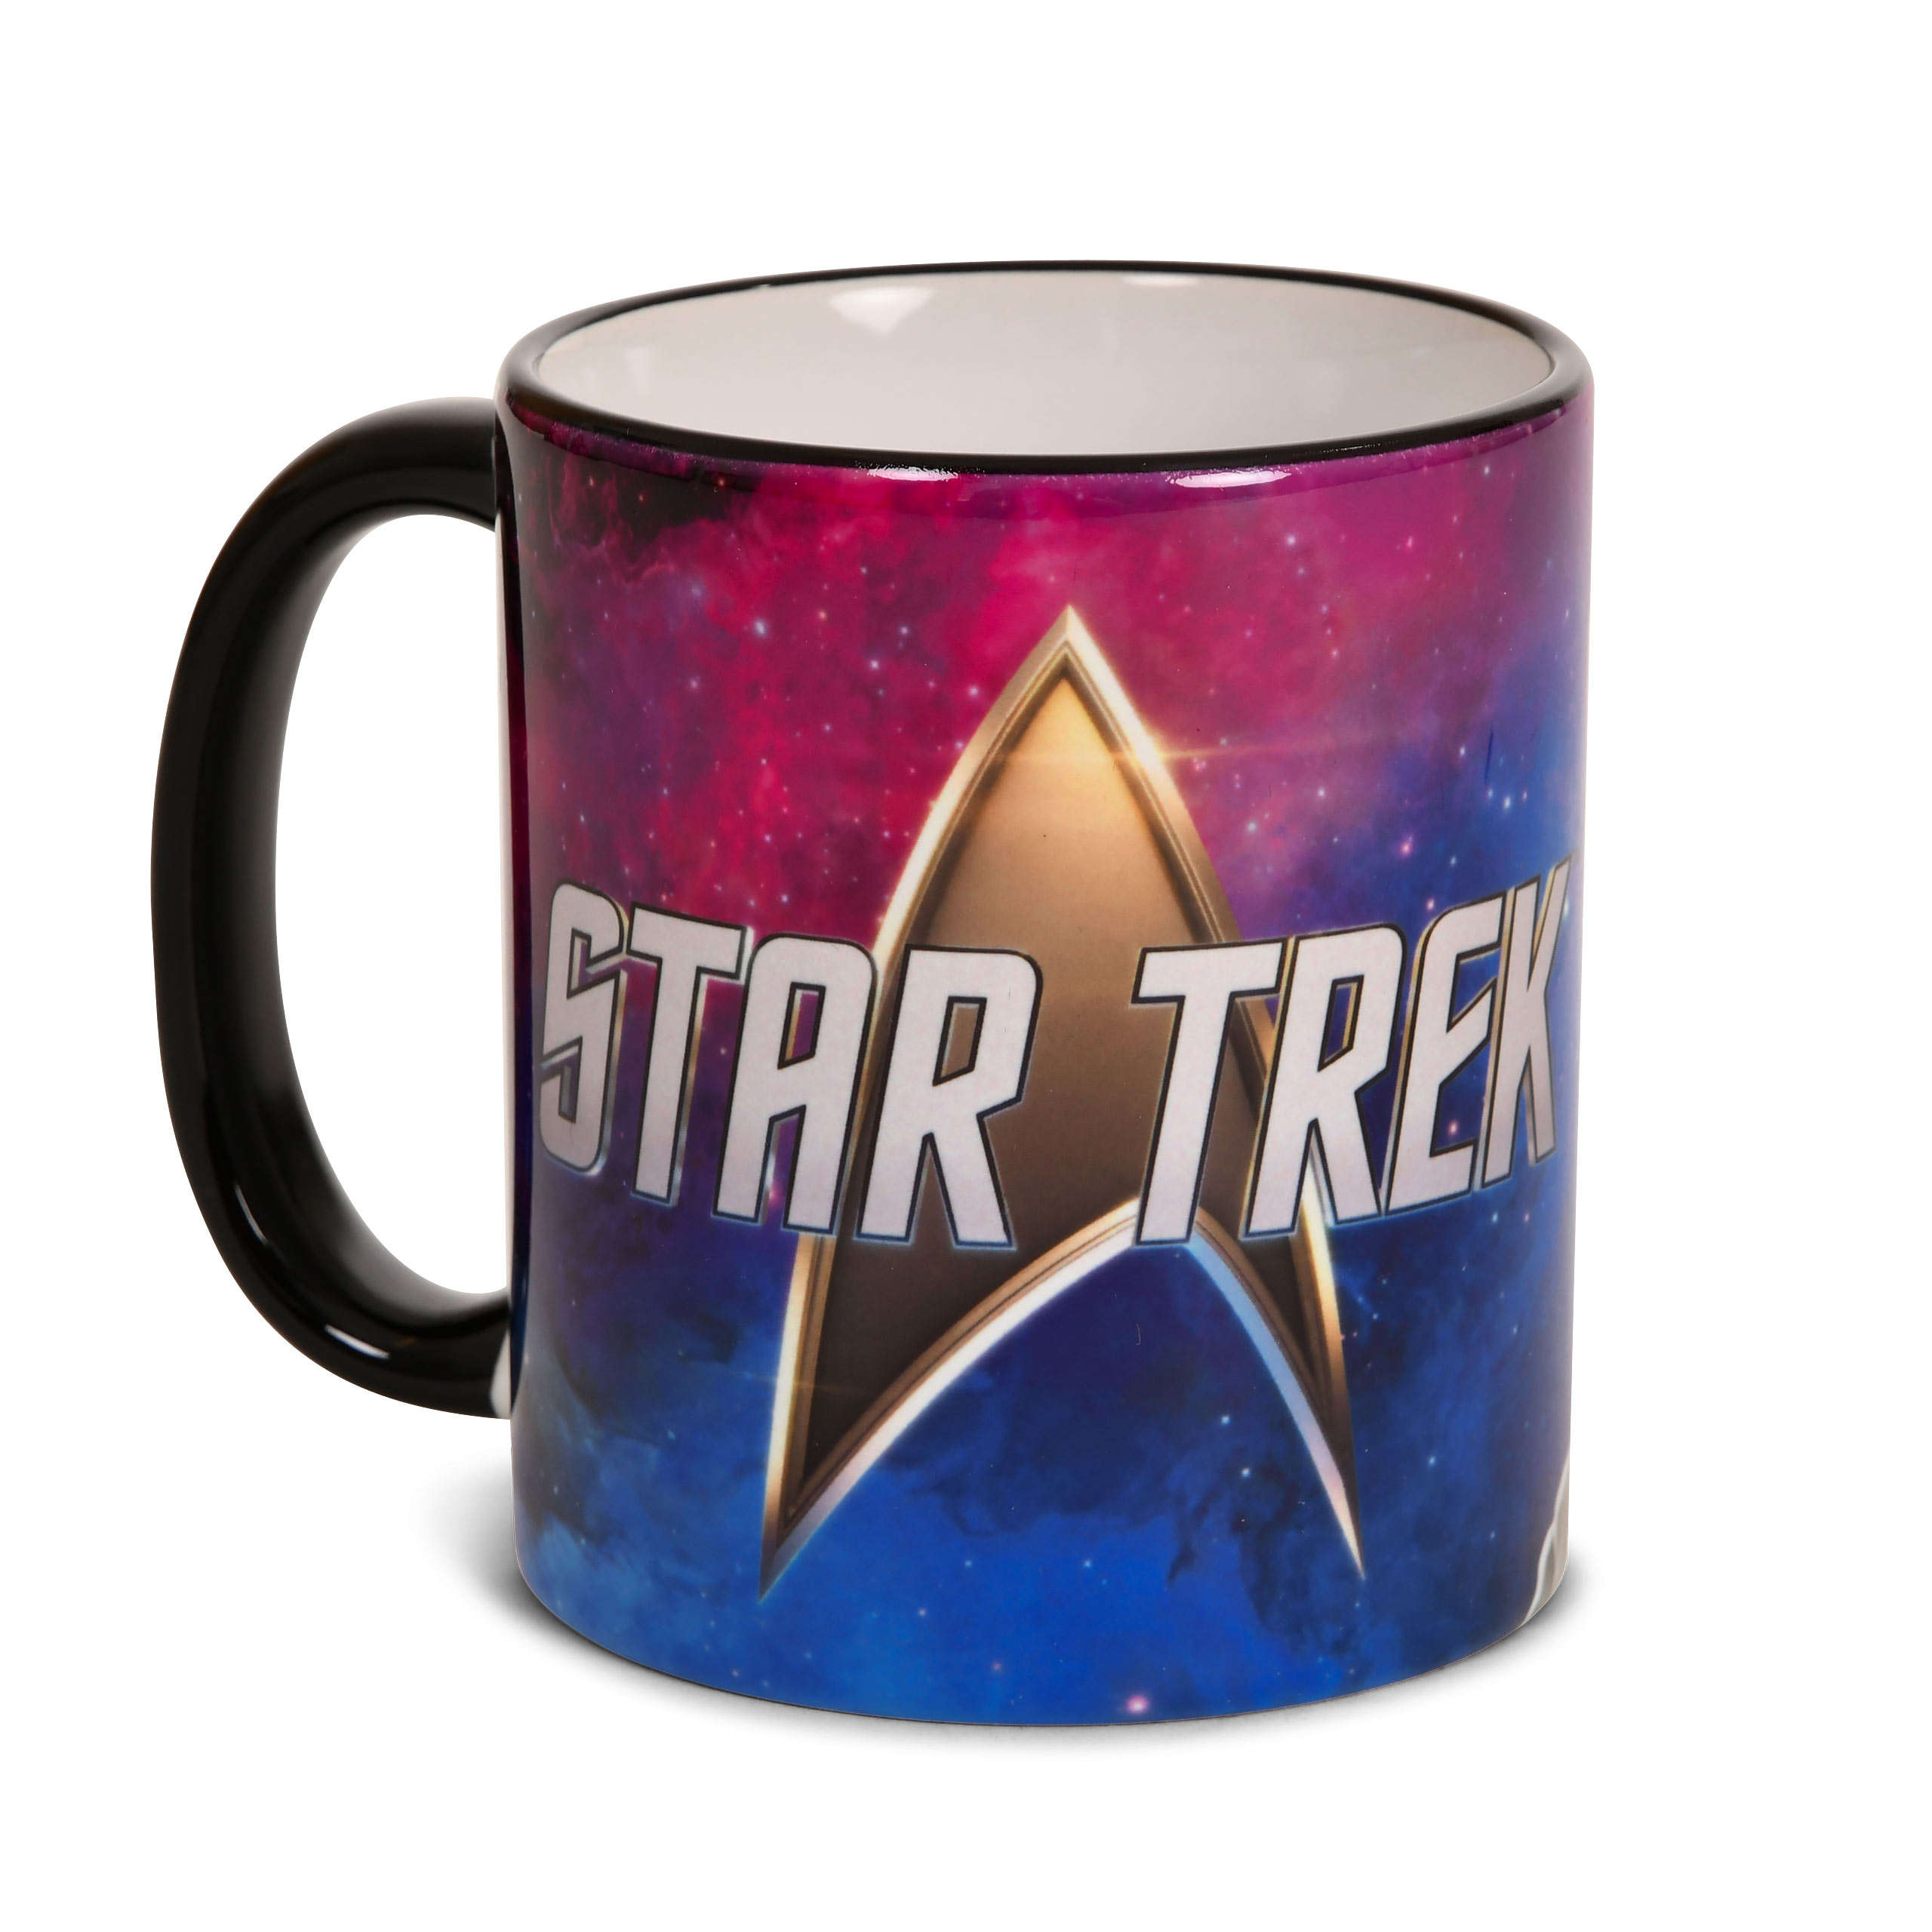 Star Trek - Quark Cup